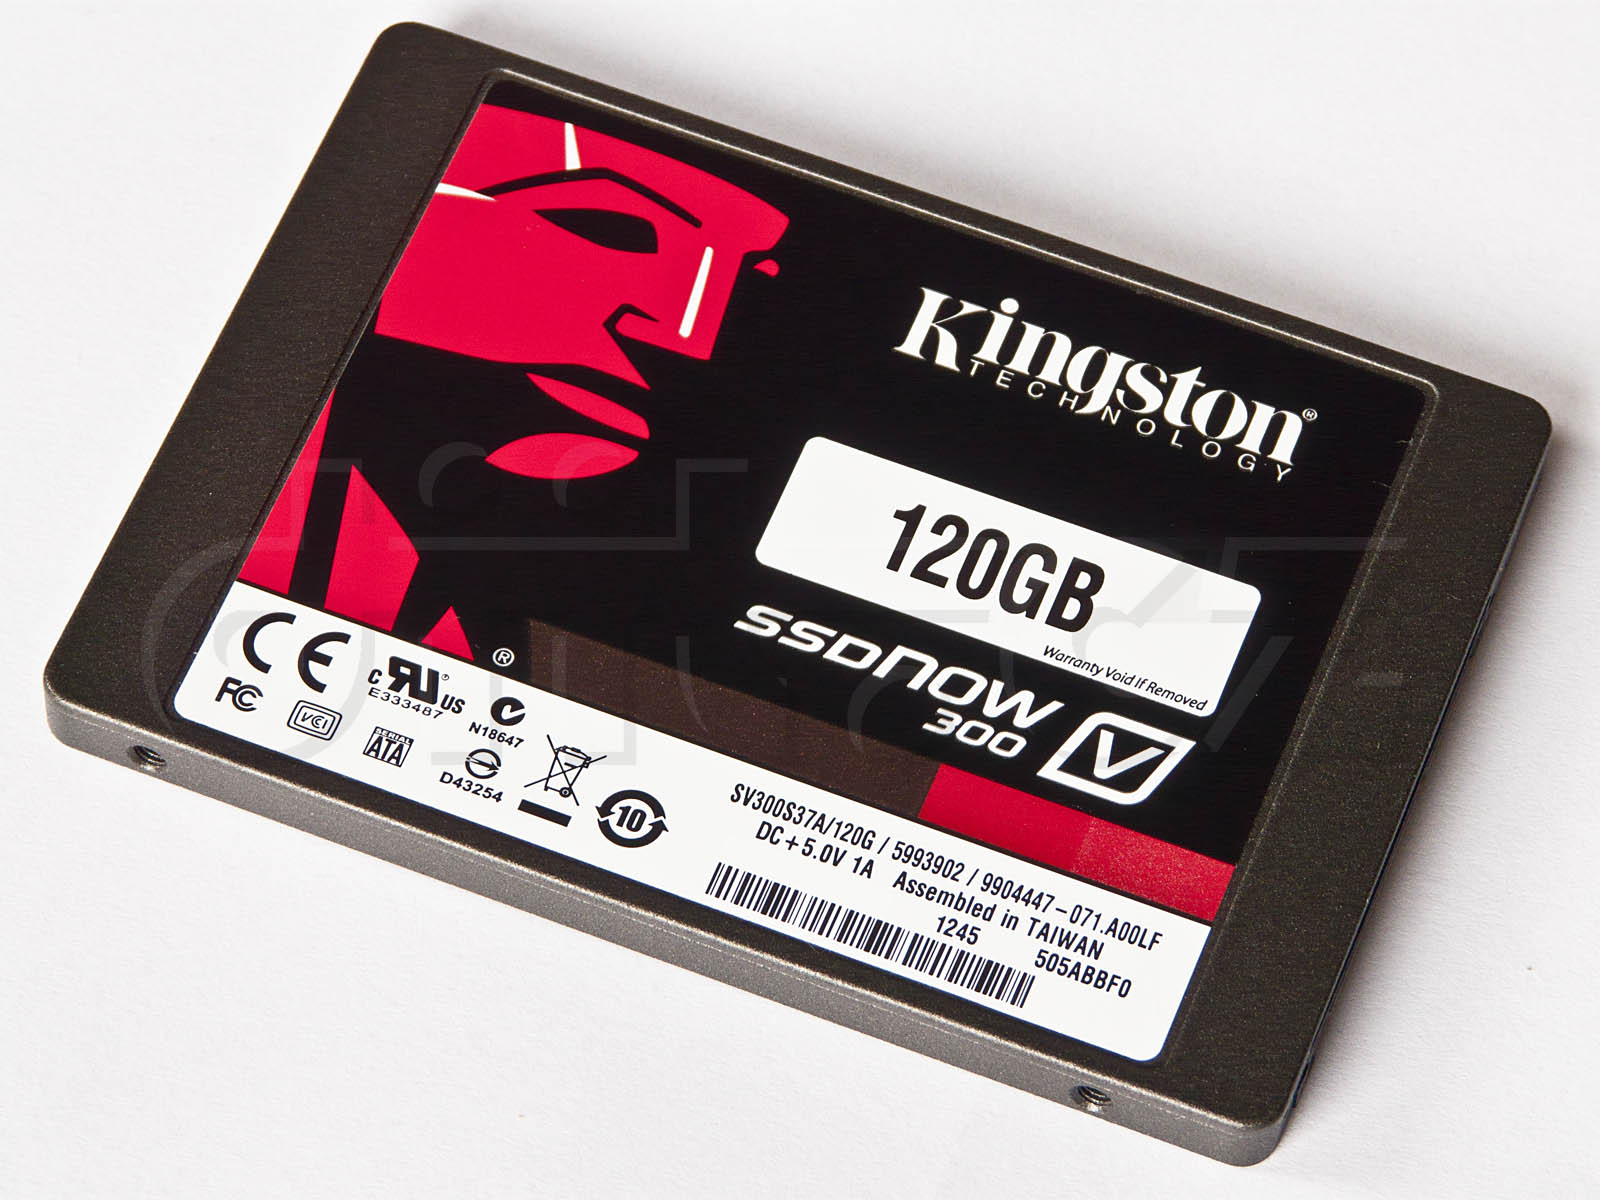 120GB Kingston SSDNow V300 s 19nm Toggle mode |